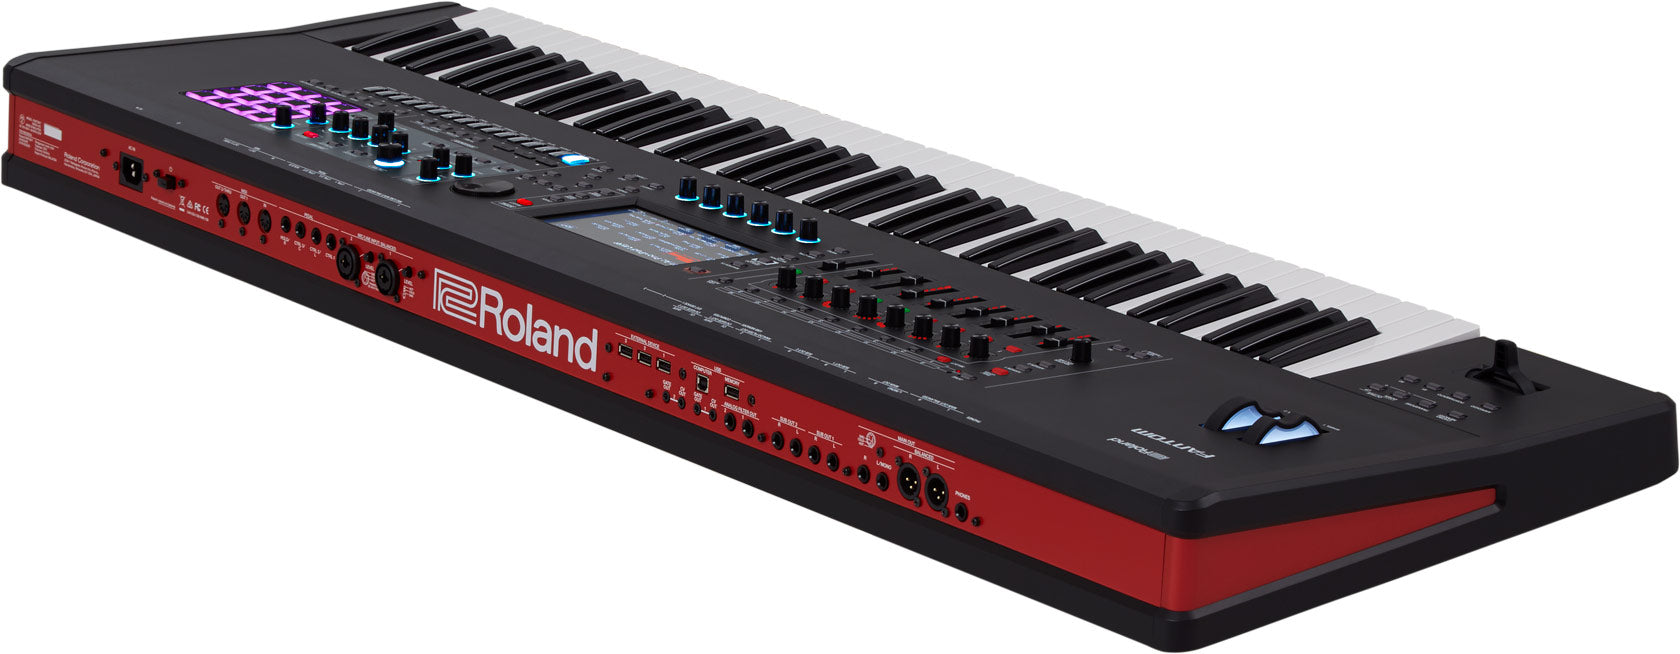 Roland FANTOM-7 Music Workstation Keyboard (Fantom 7 Fantom7), ROLAND, WORKSTATION, roland-workstation-fantom-7, ZOSO MUSIC SDN BHD